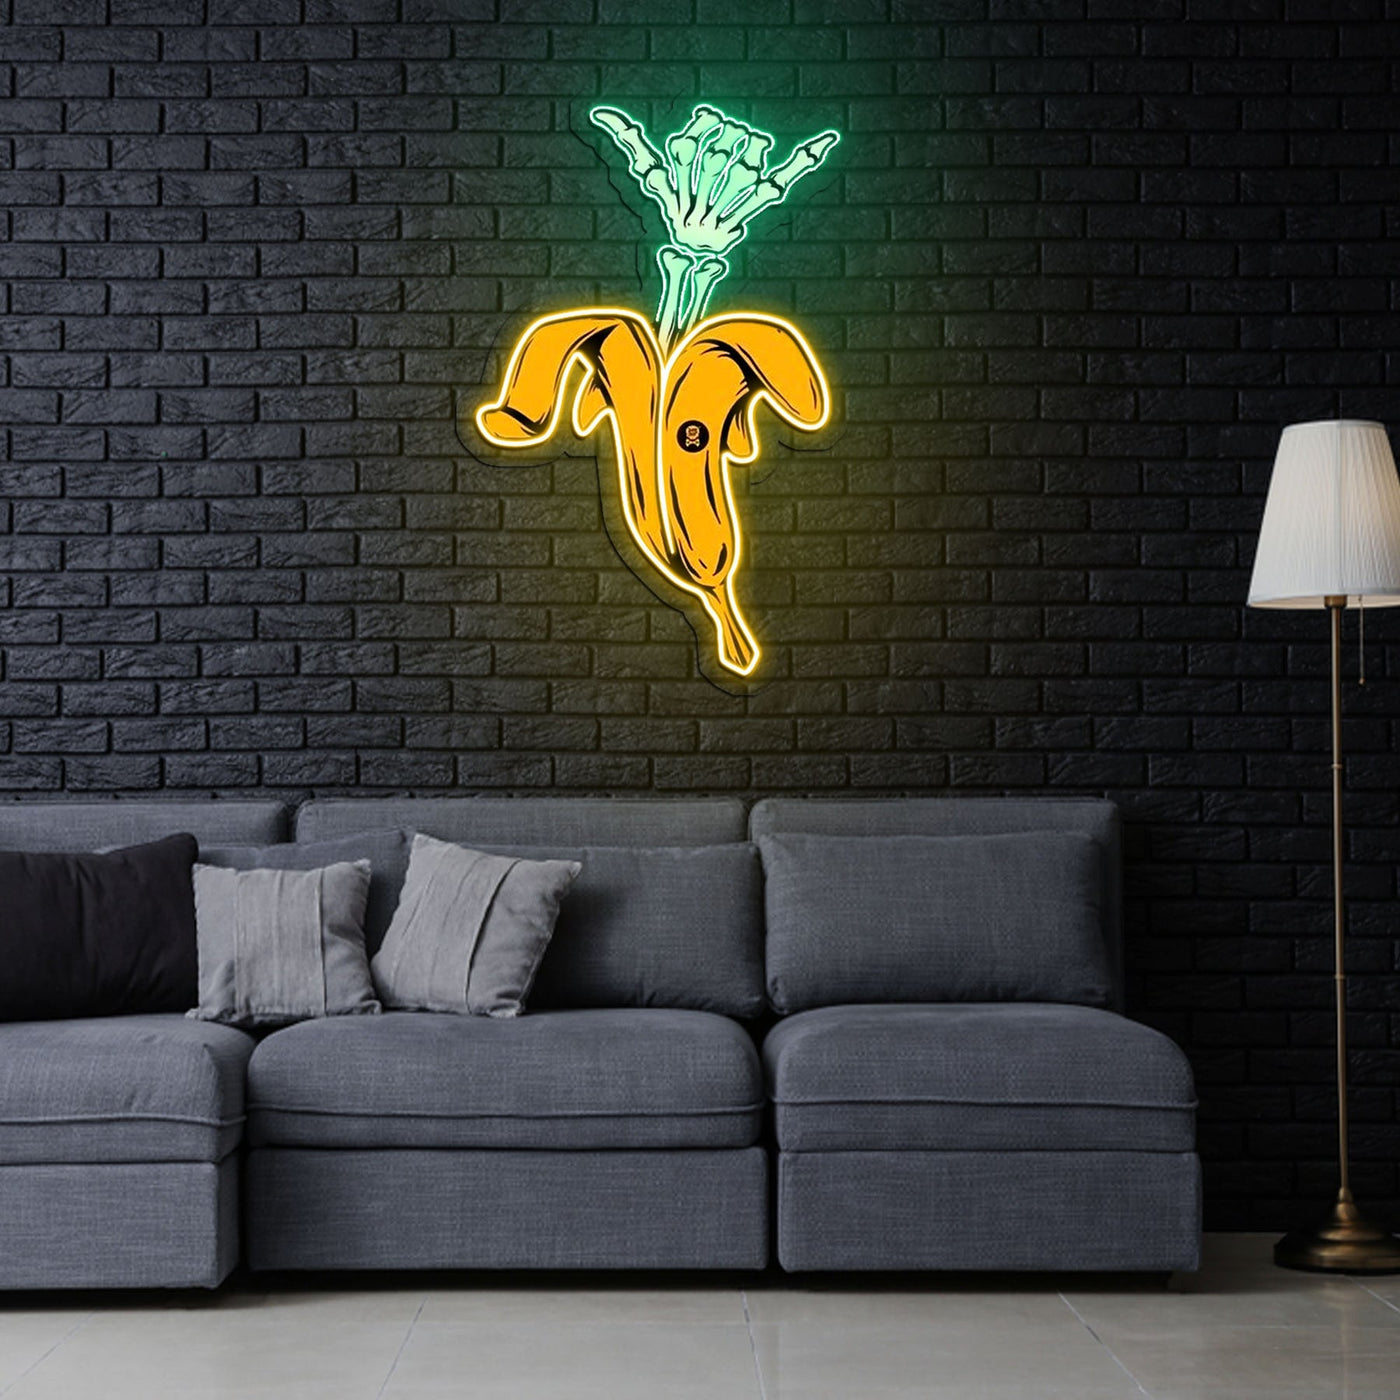 Cool Banana Neon Sign x Acrylic Artwork - 2ftLED Neon x Acrylic Print